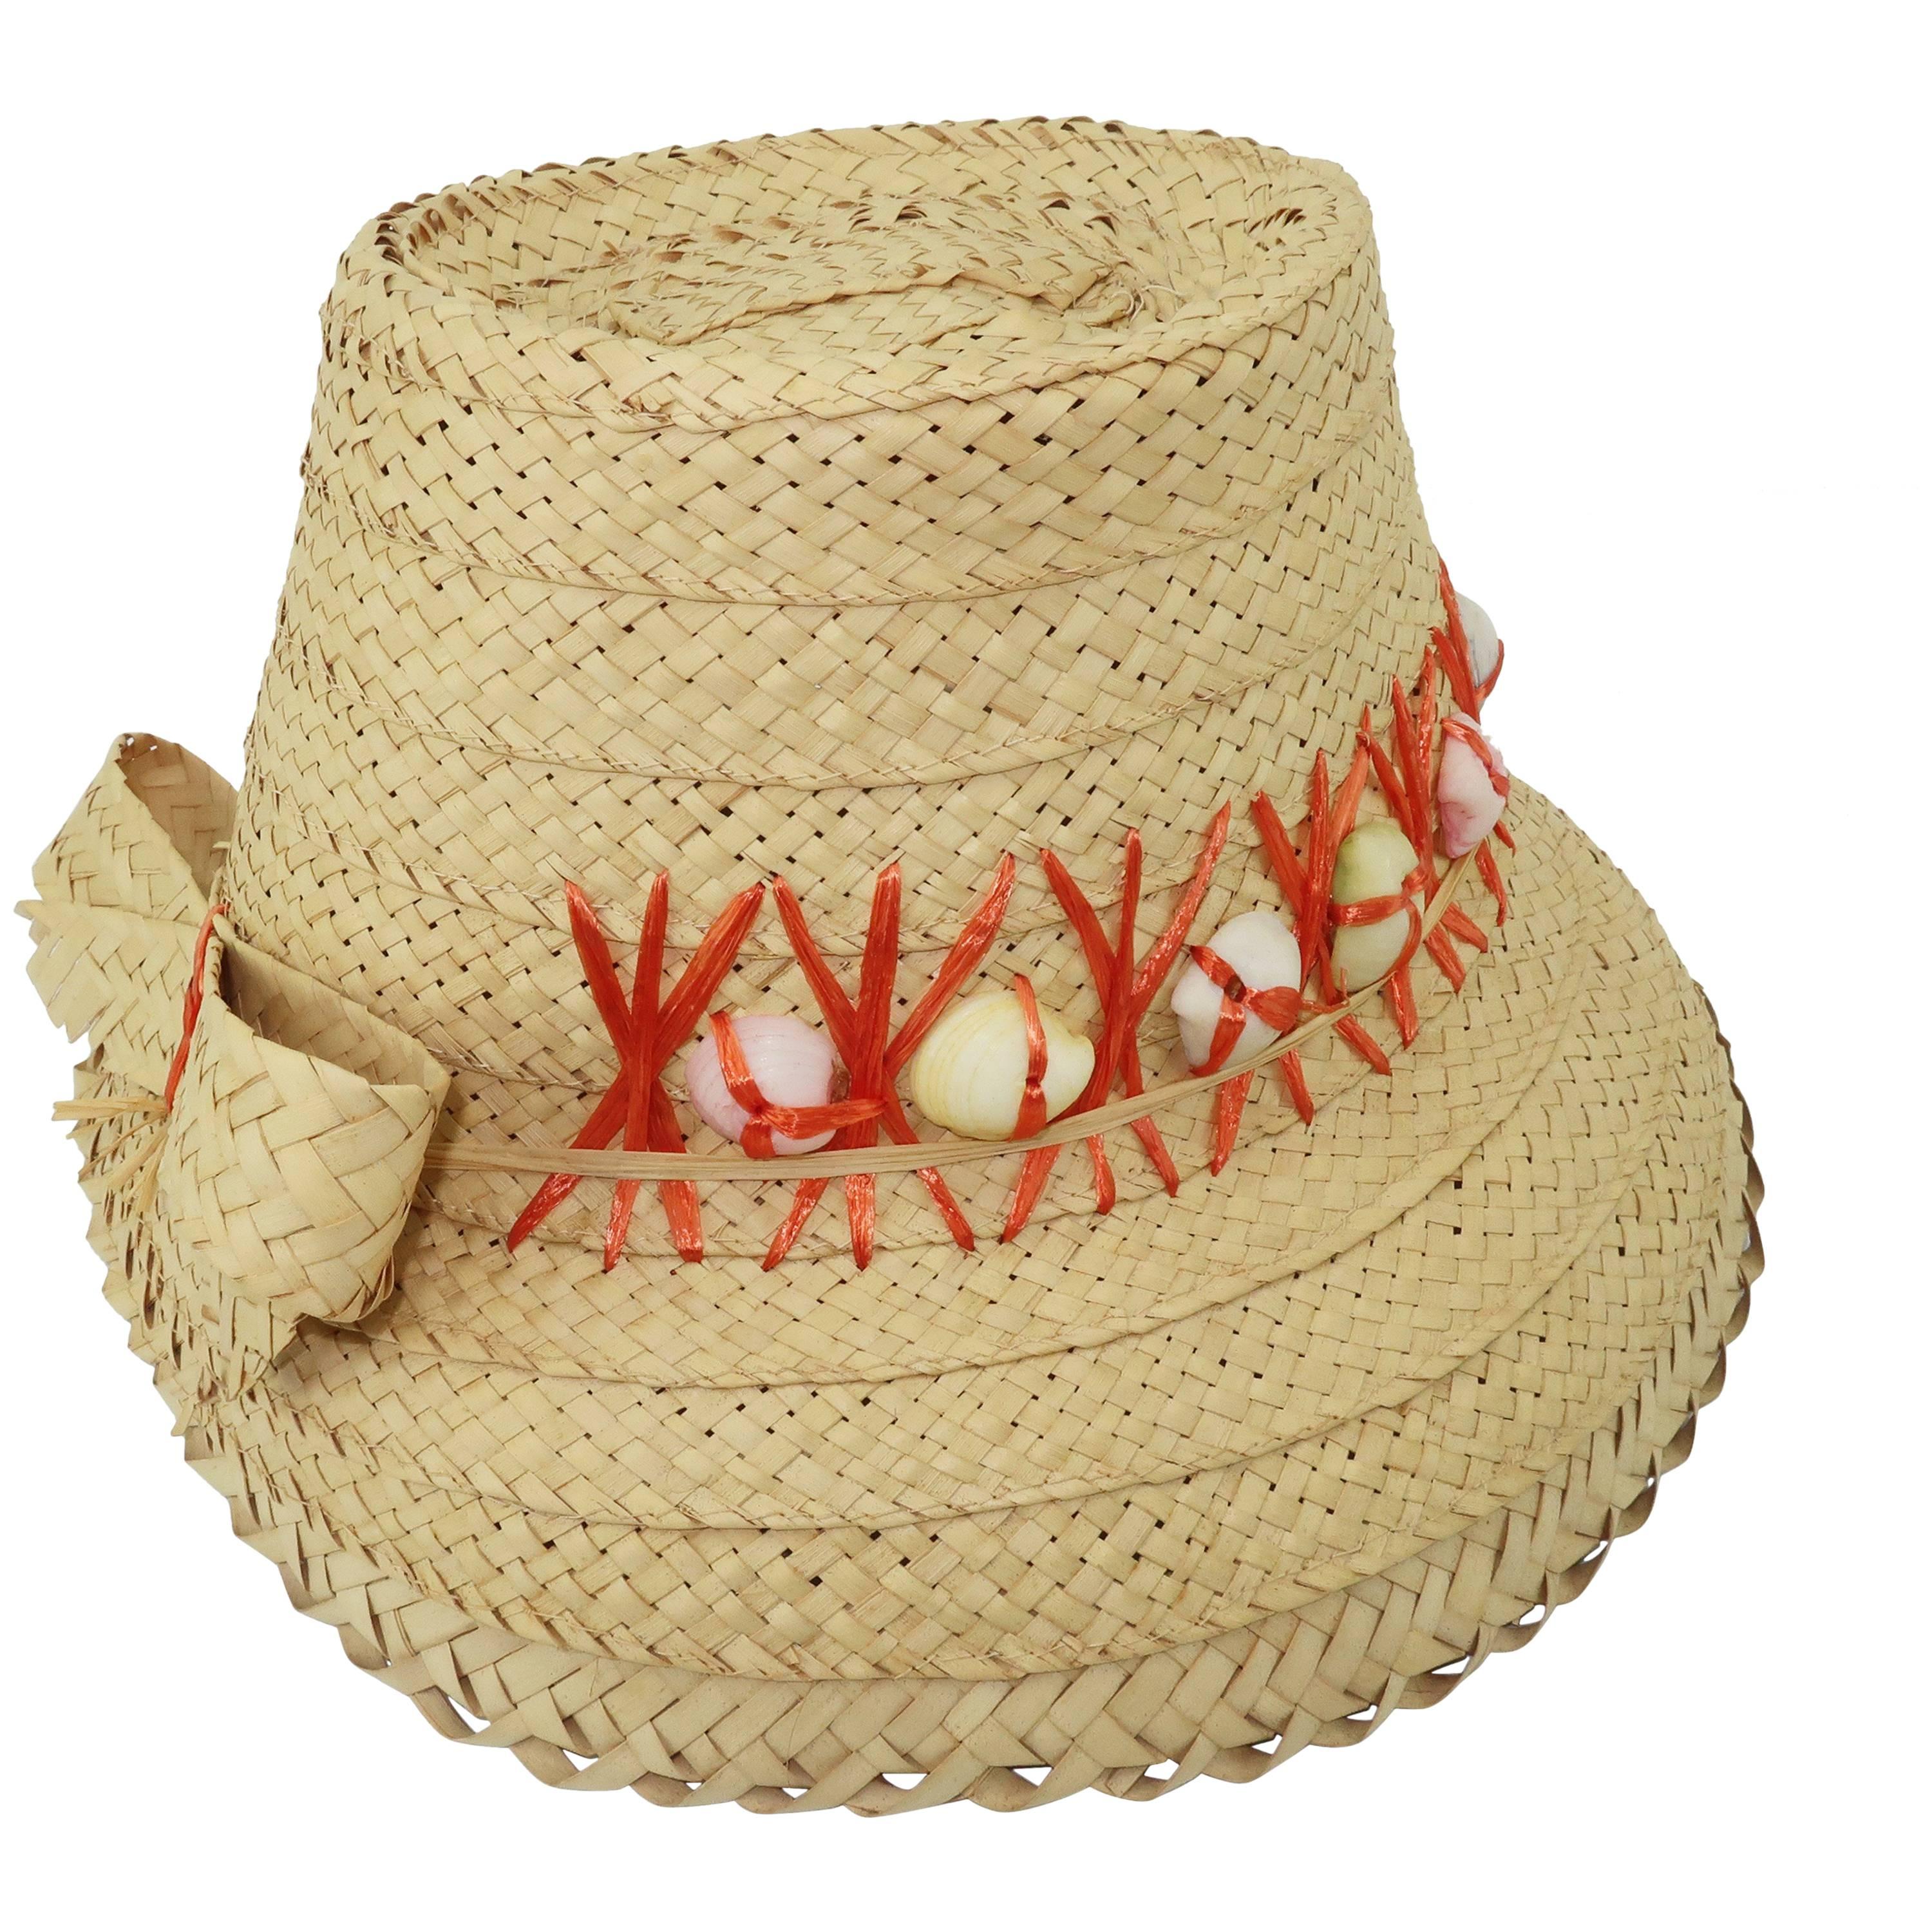 C.1960 Straw Beach Hat With Shell Trim & Bow